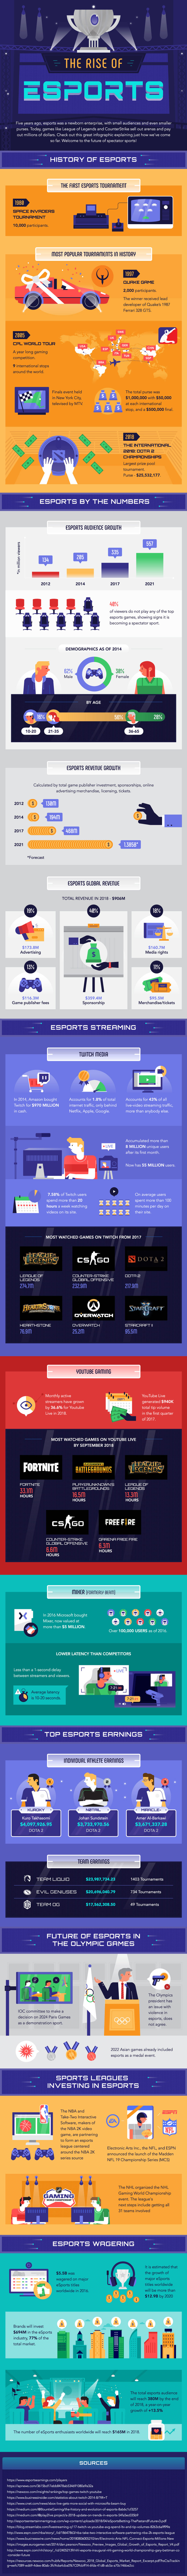 Esports-infographic-njgames